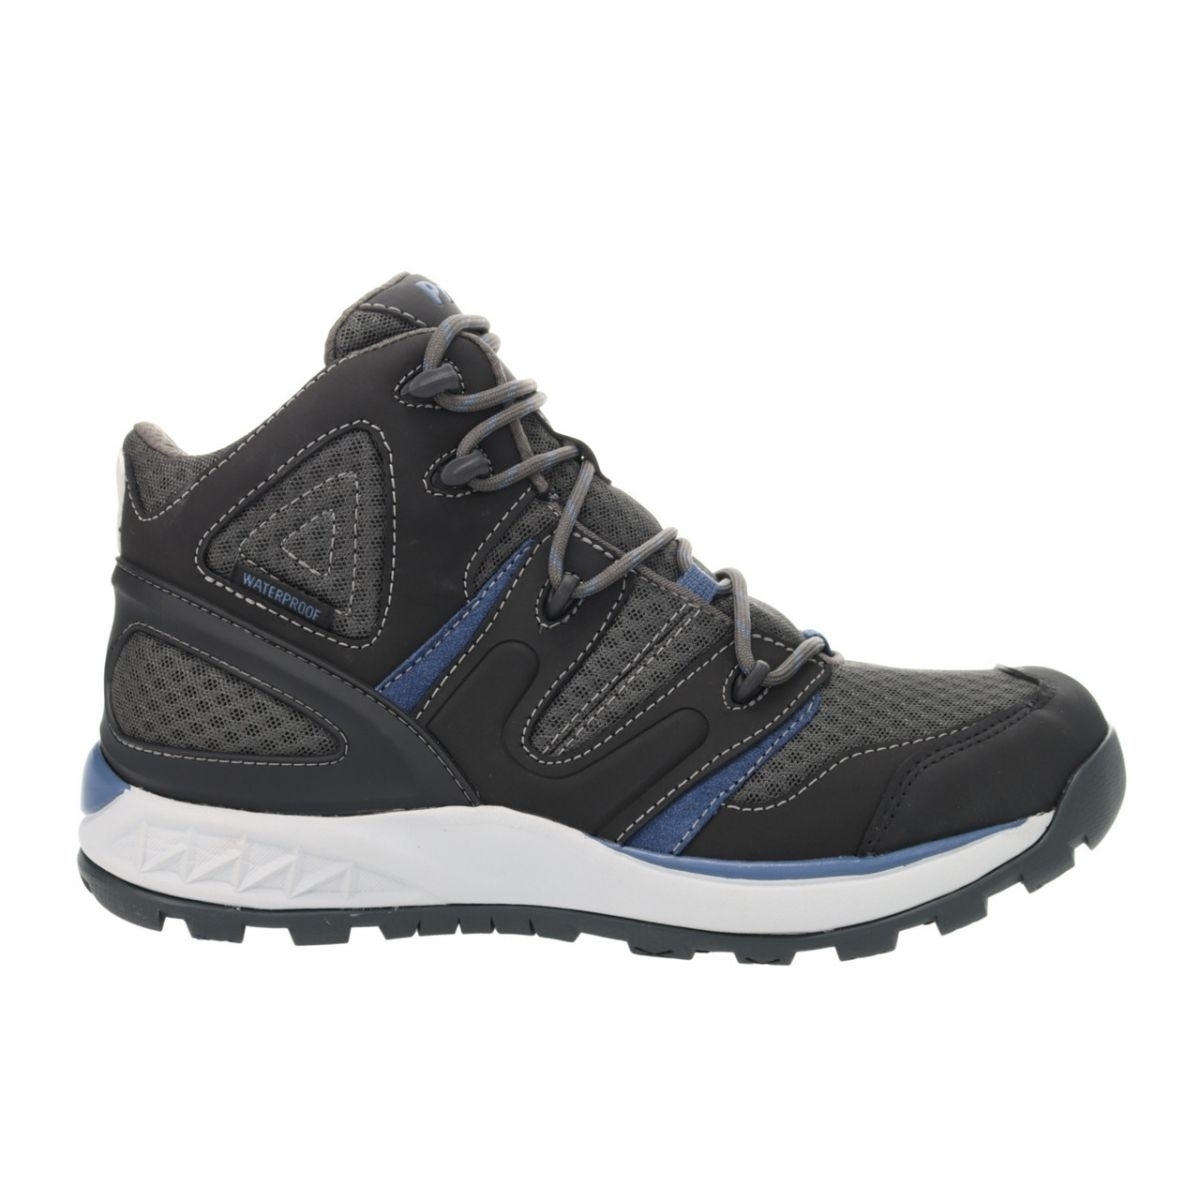 Propet Men's Veymont Waterproof Hiking Boot Grey/Blue - MOA022SGRB GREY/BLUE - GREY/BLUE, 8